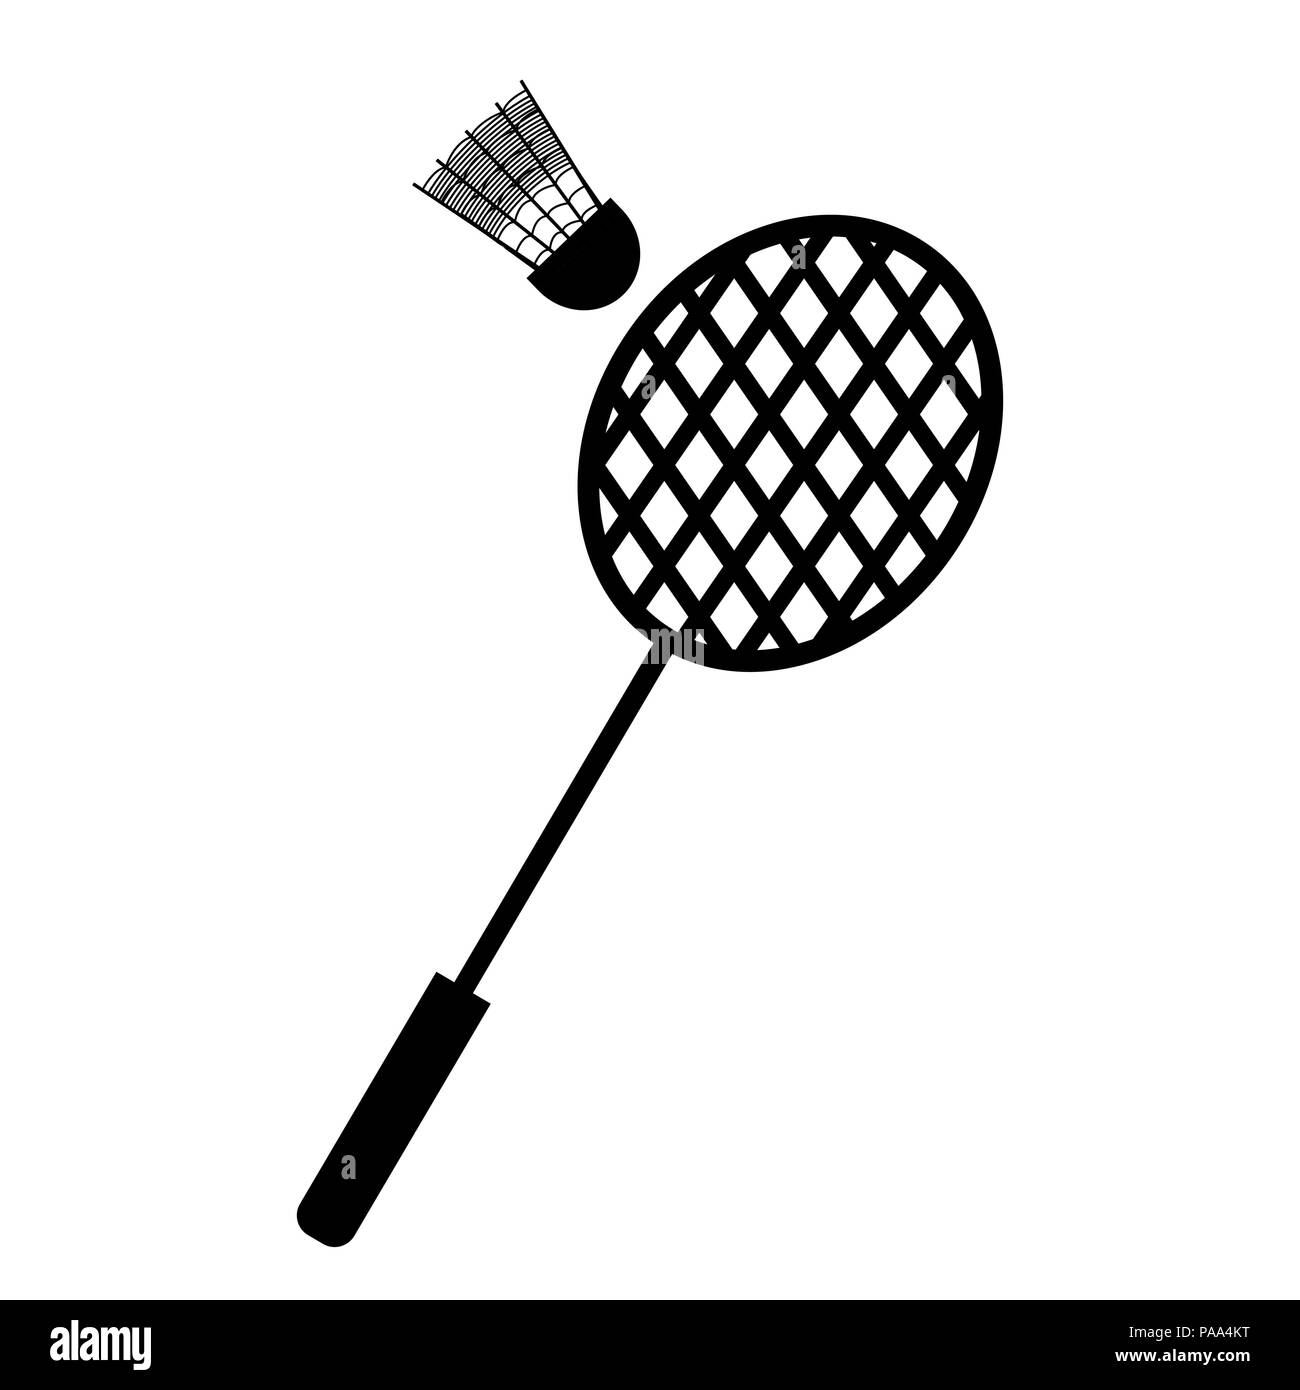 Playing badminton racket Stock Vector